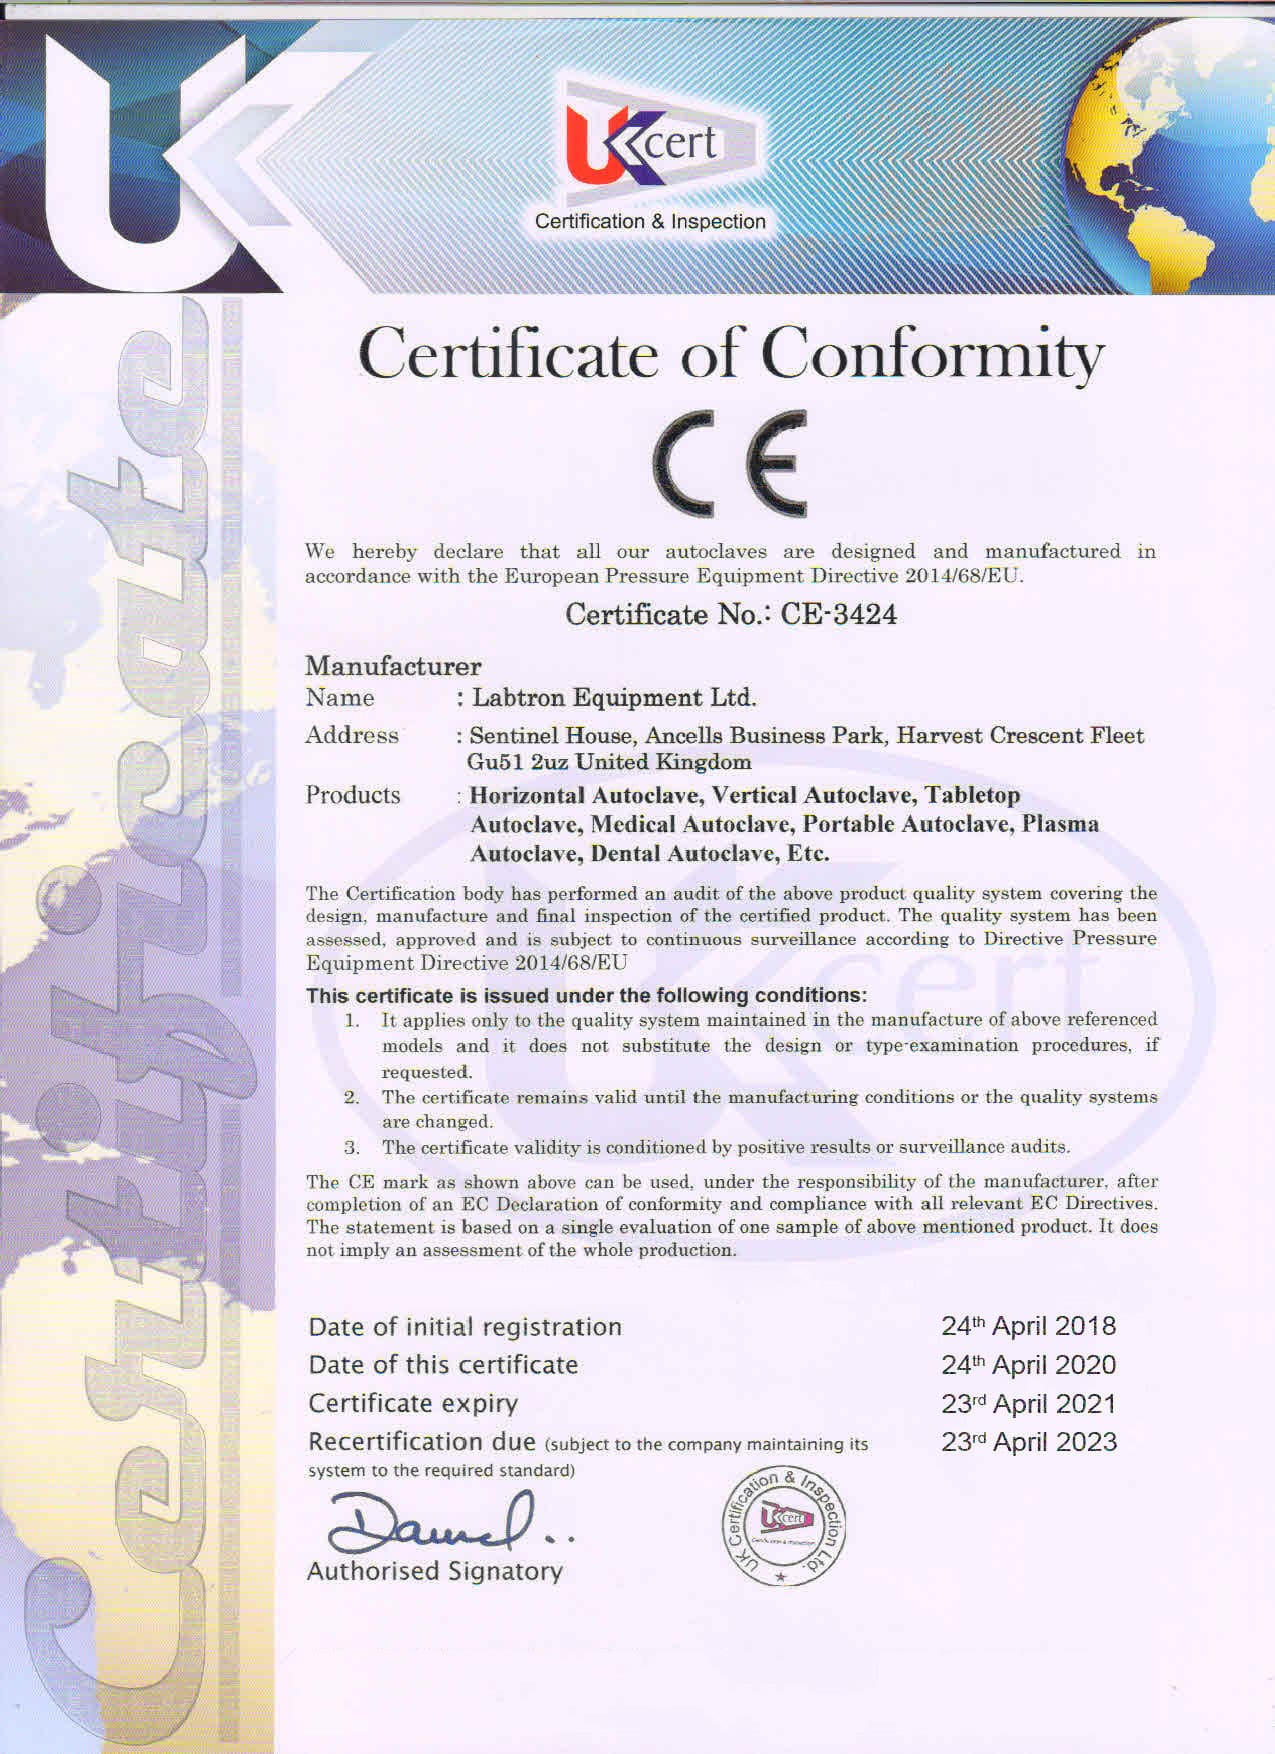 Labtron Equipment Ltd. Certificate of Conformity : Labtron Certification